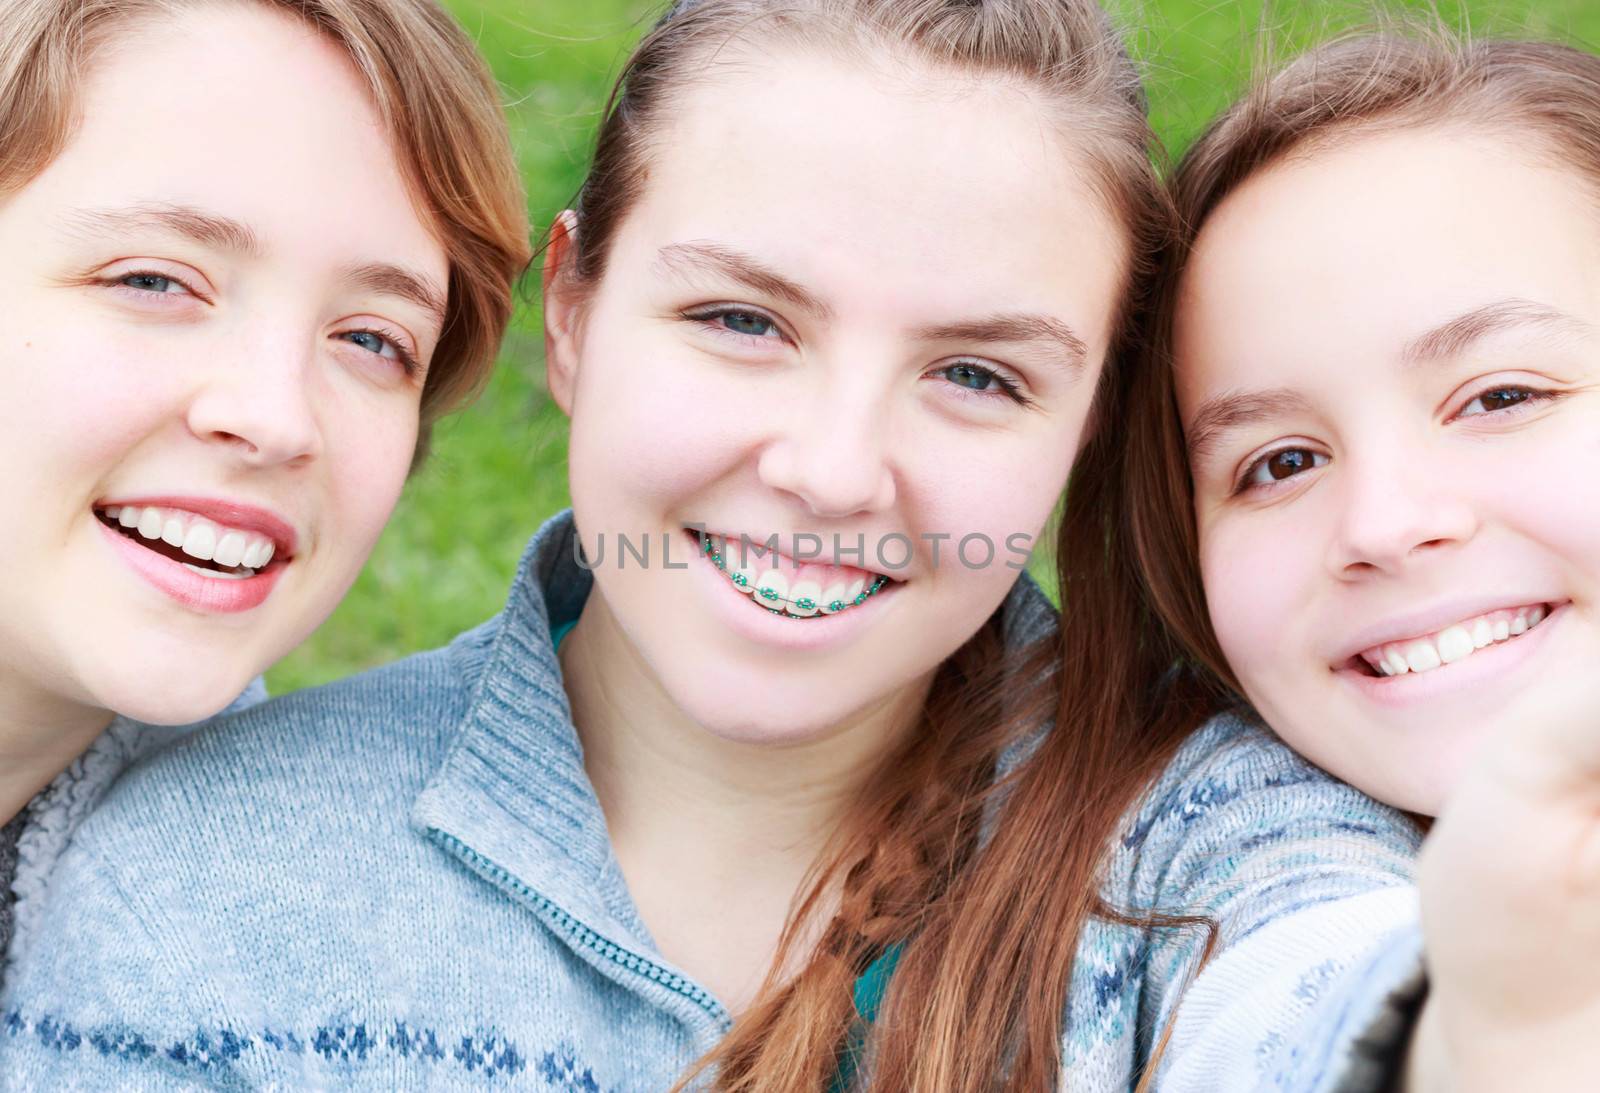 Three Cute Girls Taking a Selfie together